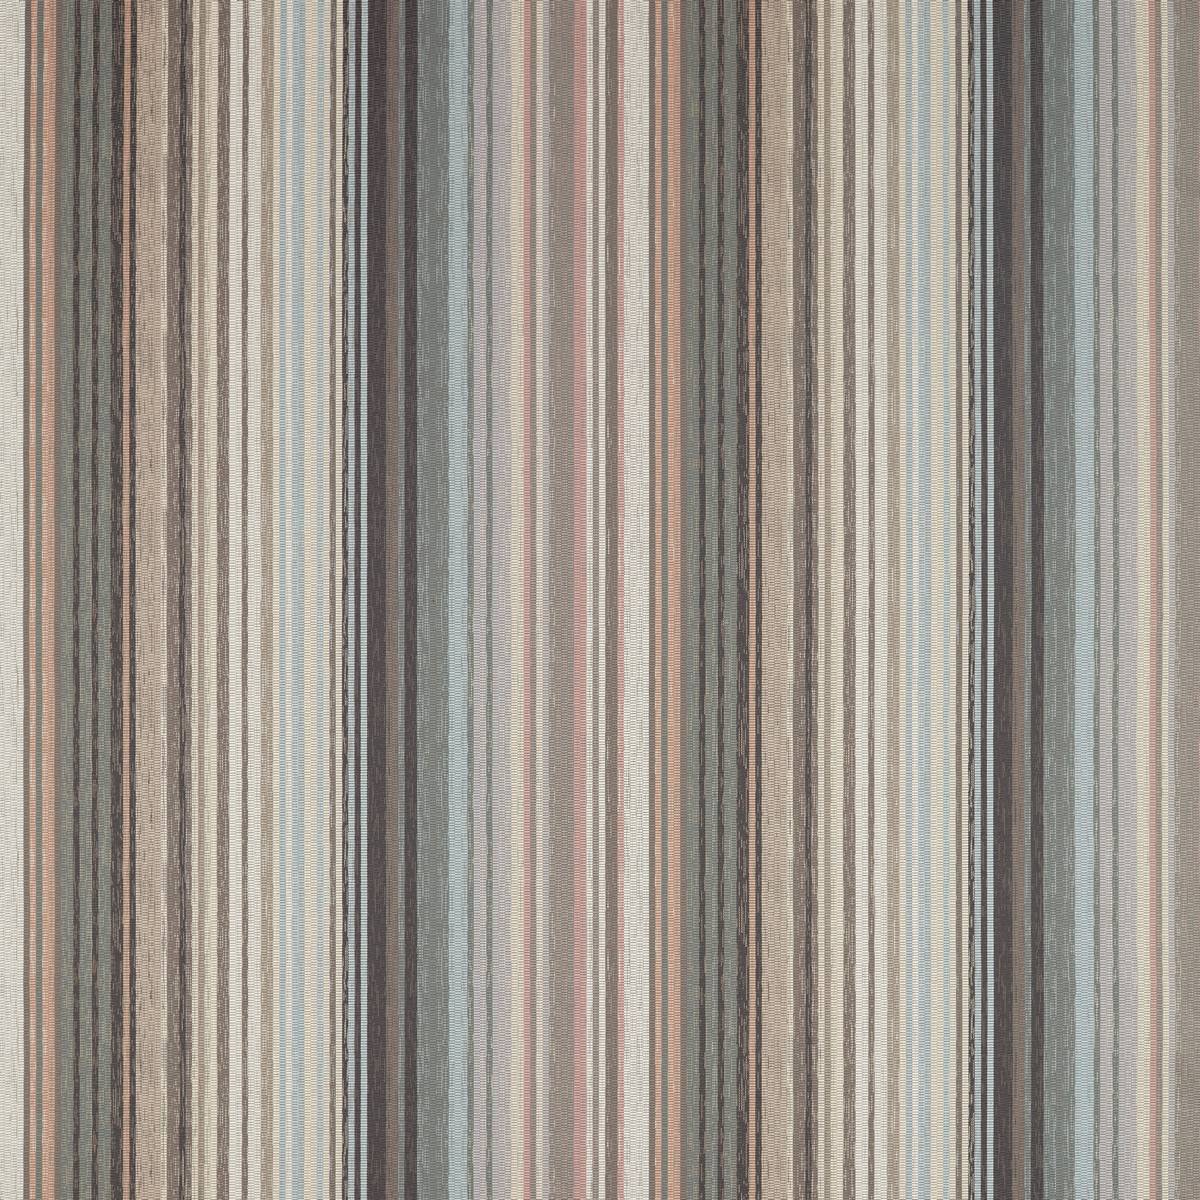 Spectro Stripe Steel/Blush/Sky Fabric by Harlequin